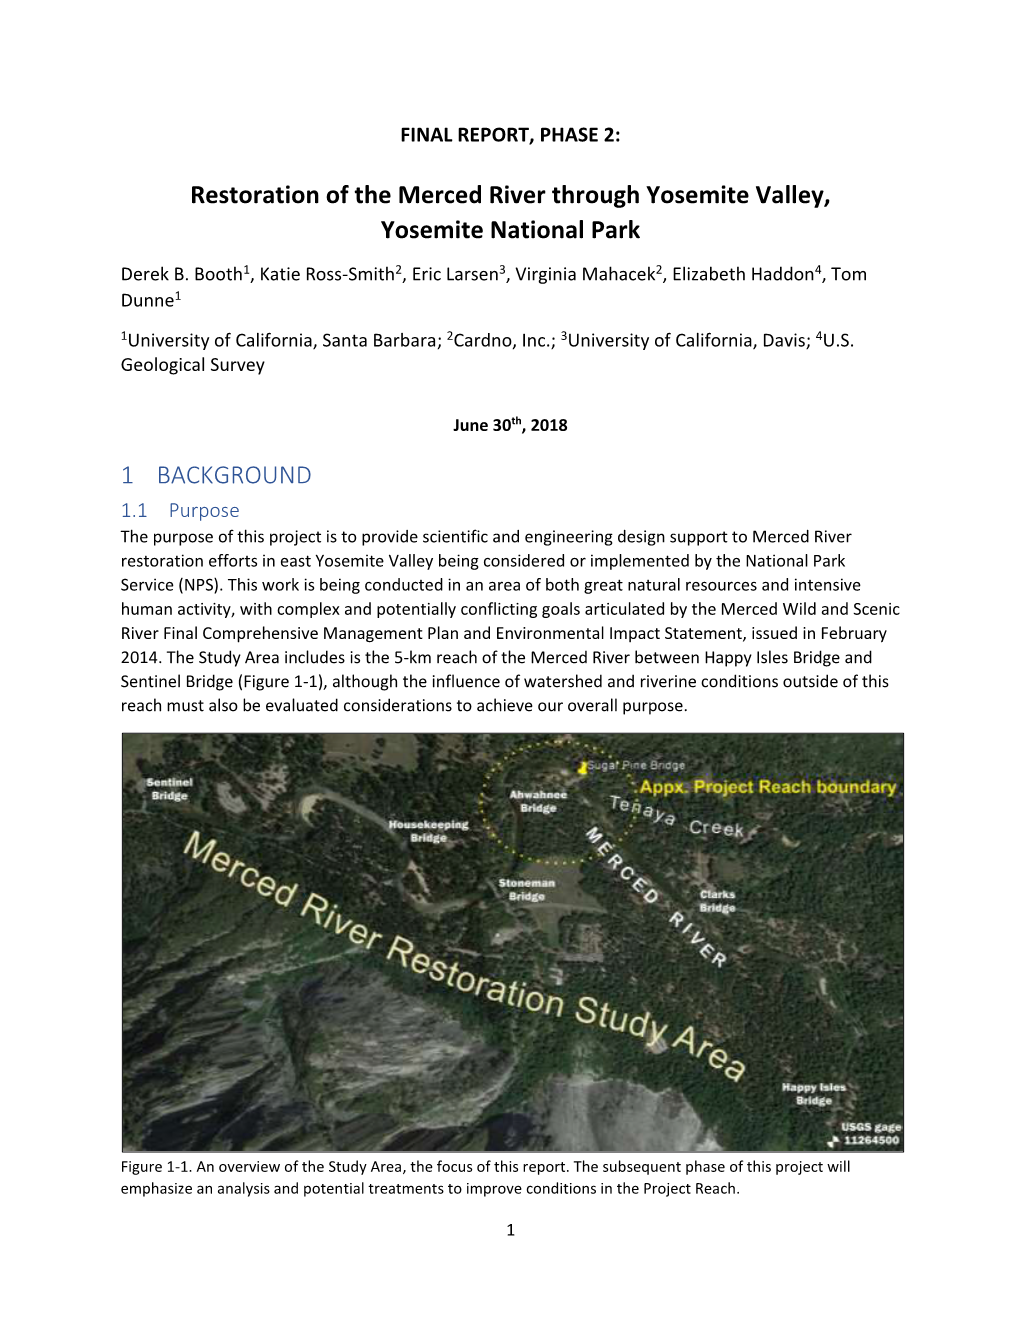 Restoration of the Merced River Through Yosemite Valley, Yosemite National Park